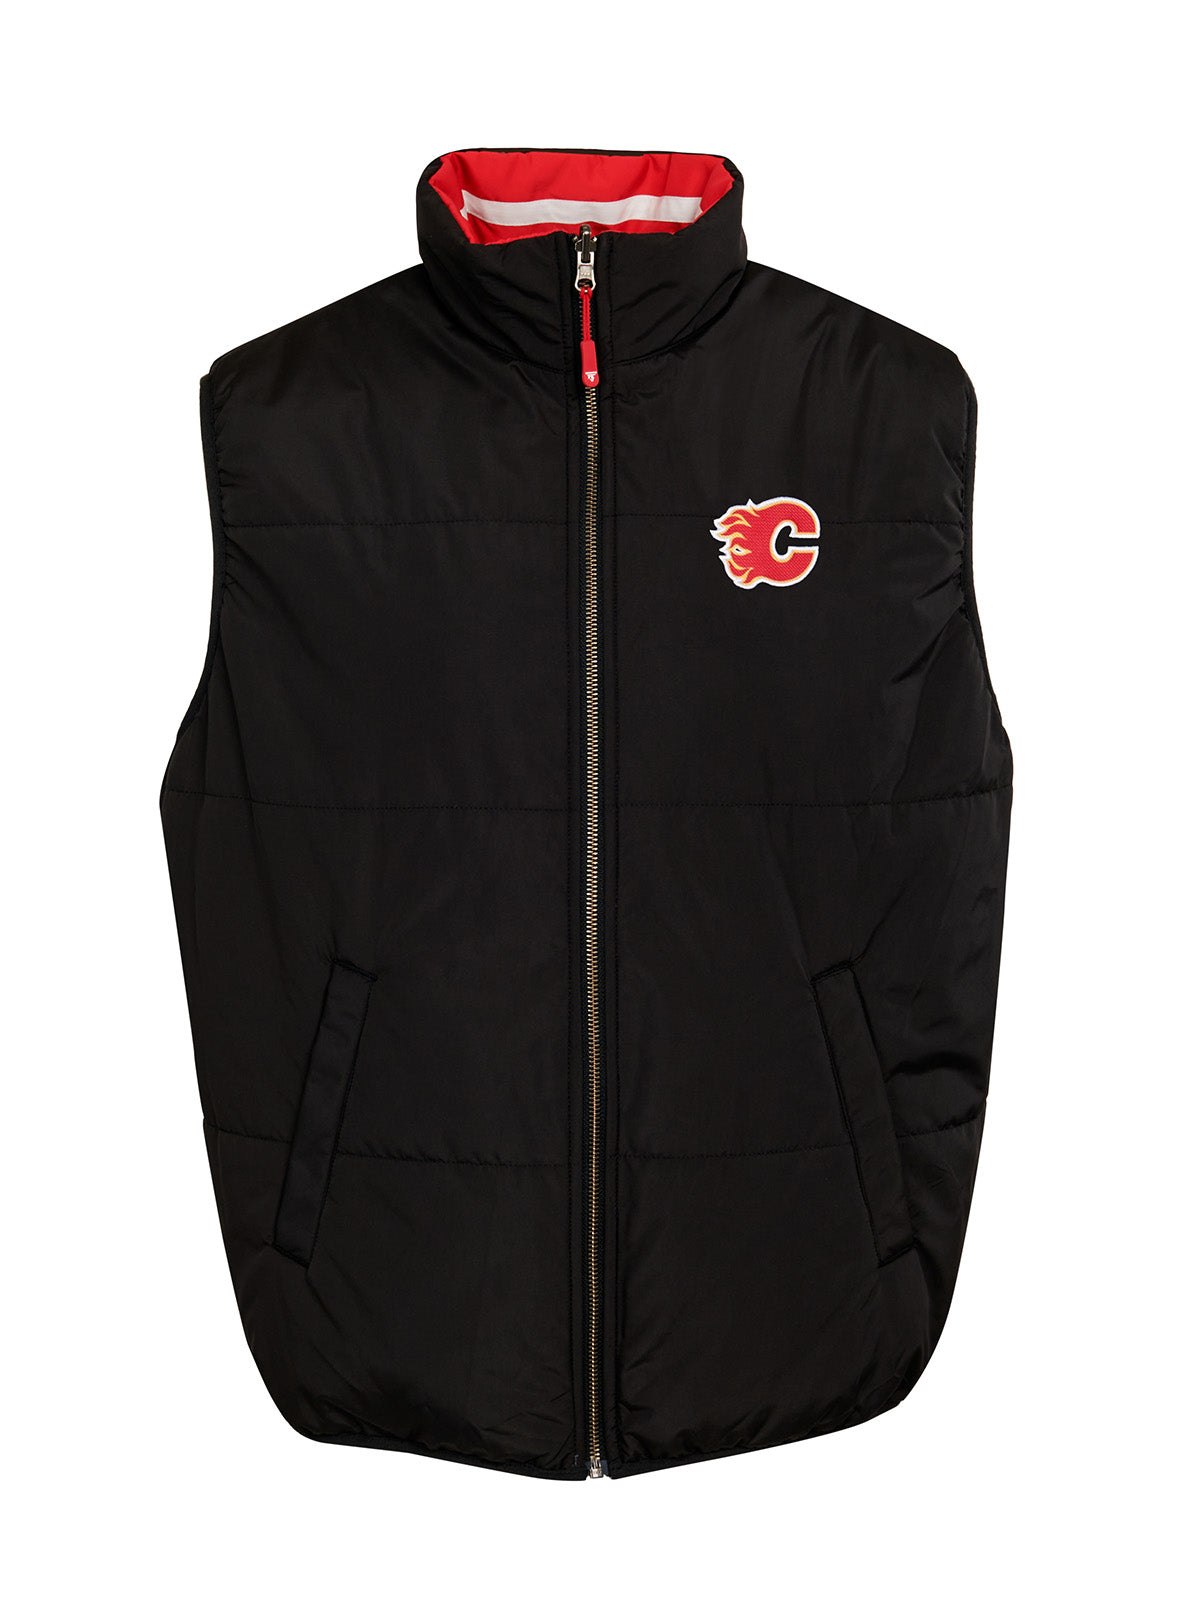 Calgary Flames Reversible Vest